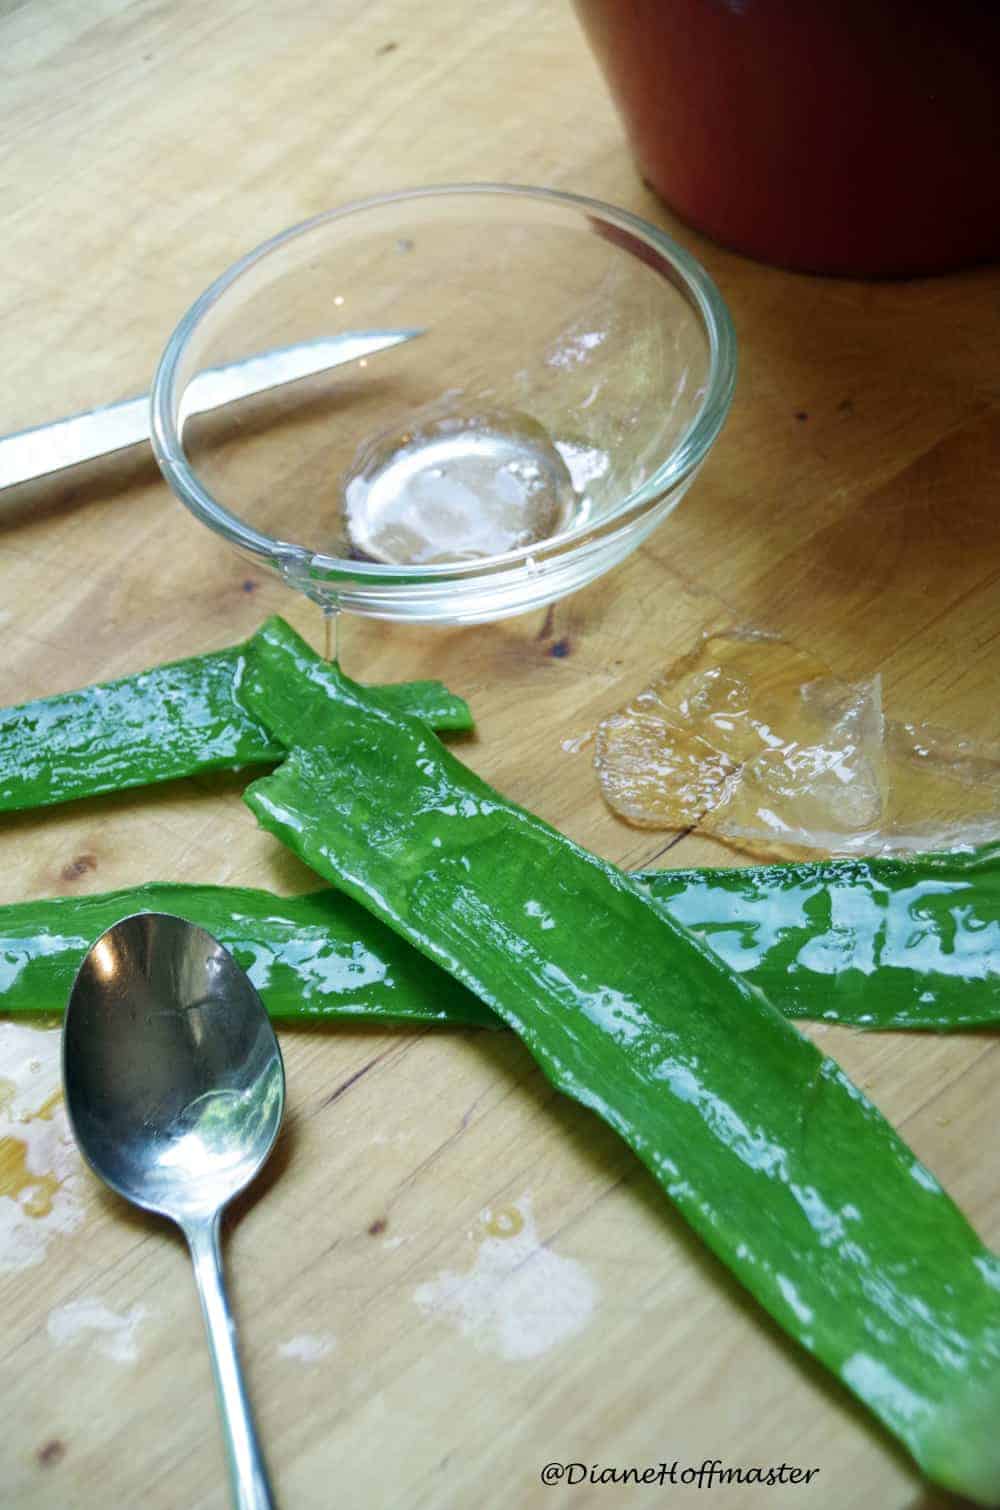 Extracting aloe vera gel from your aloe plant